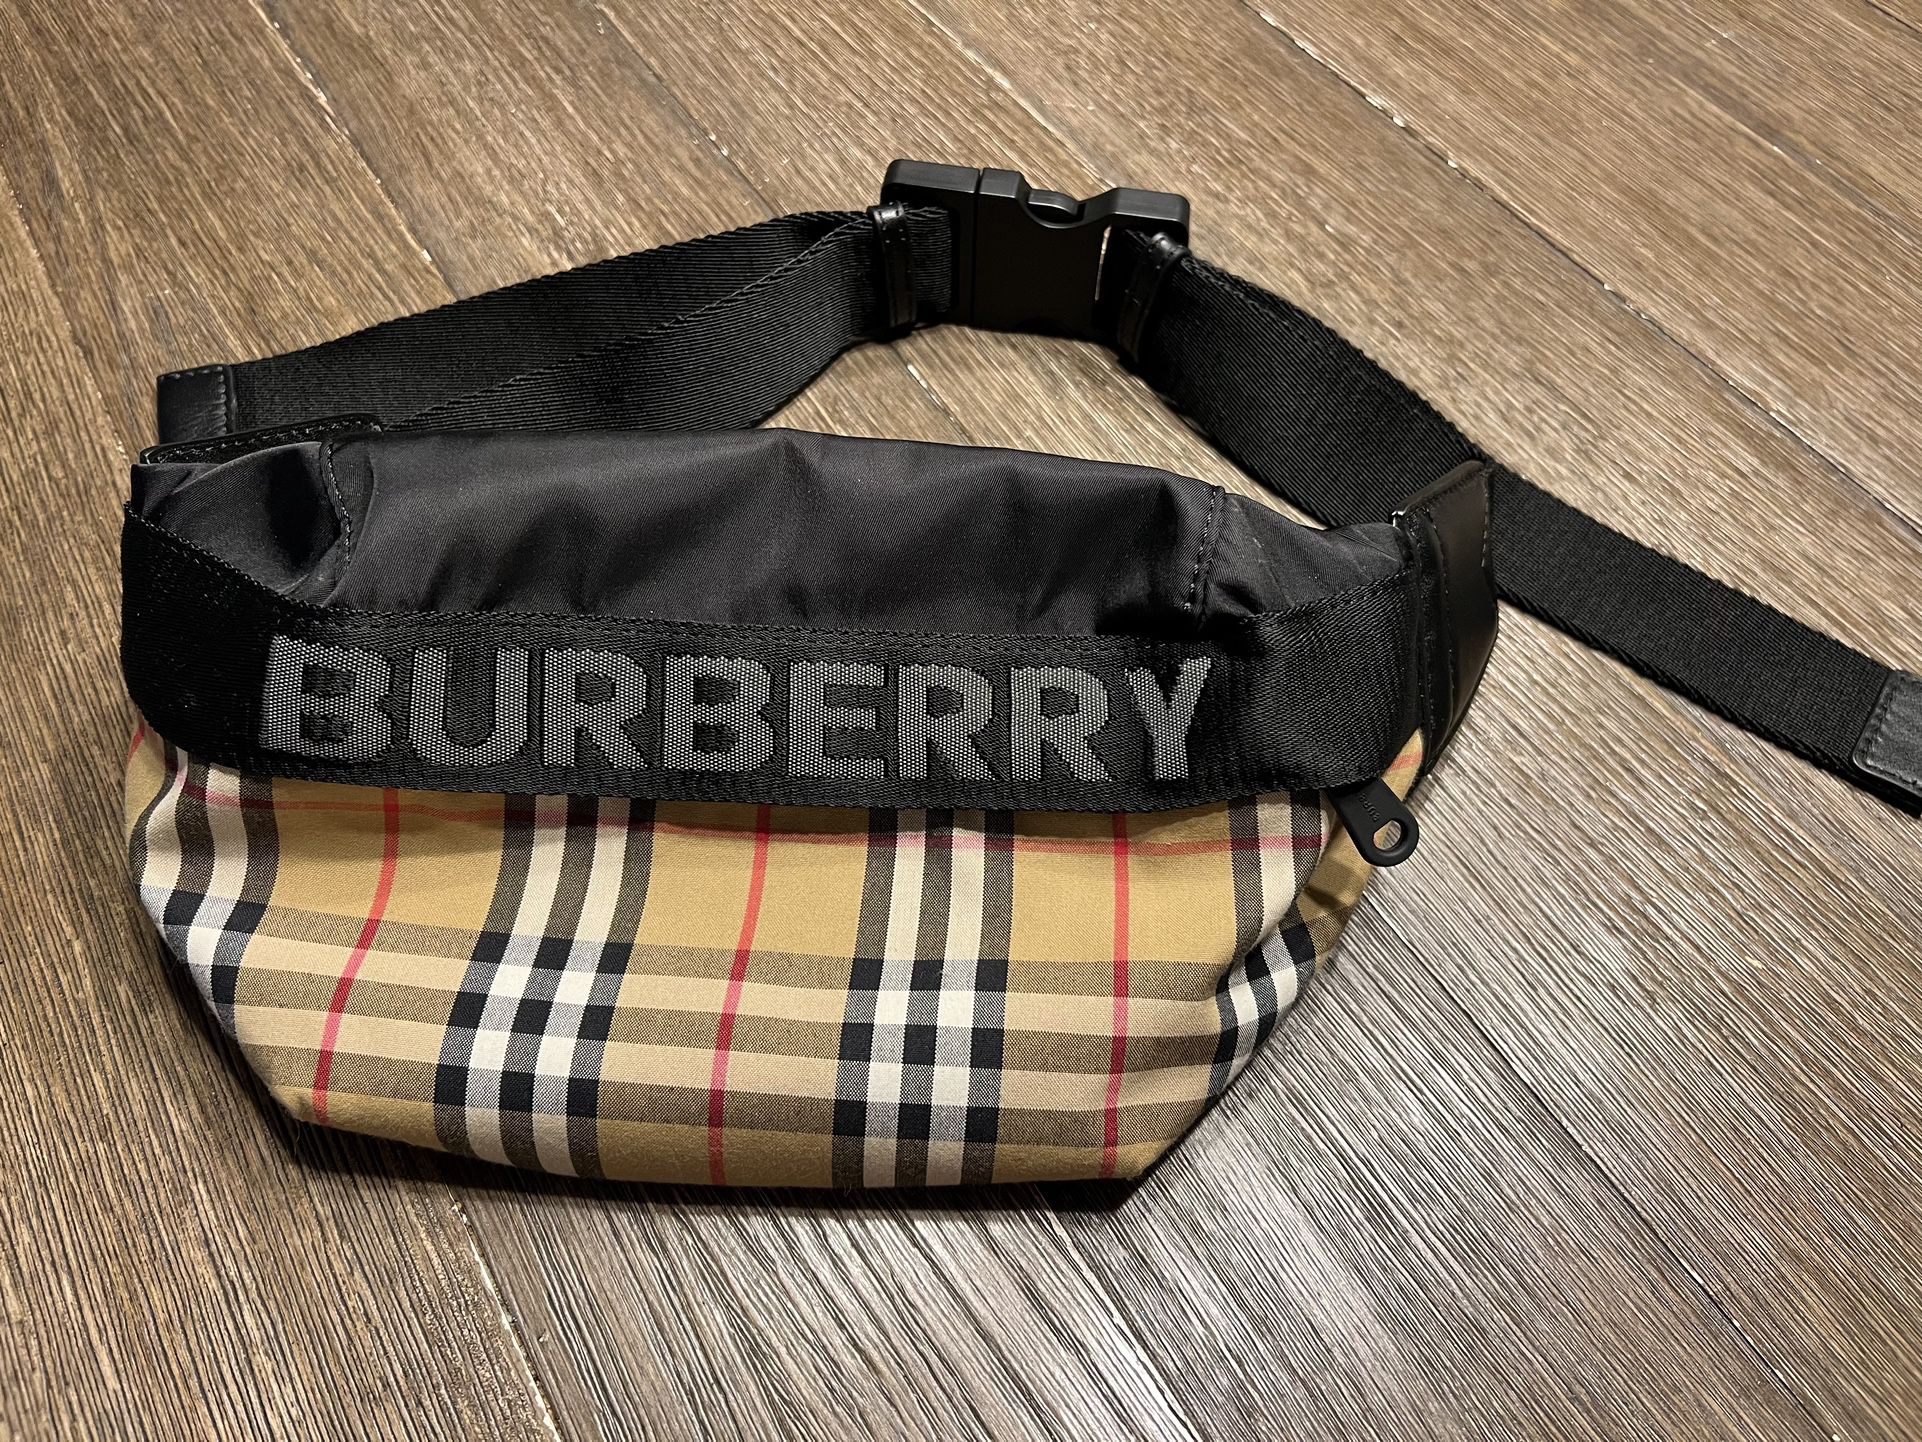 Burberry Bum Bag Vintage Check Medium Archive Beige/Black